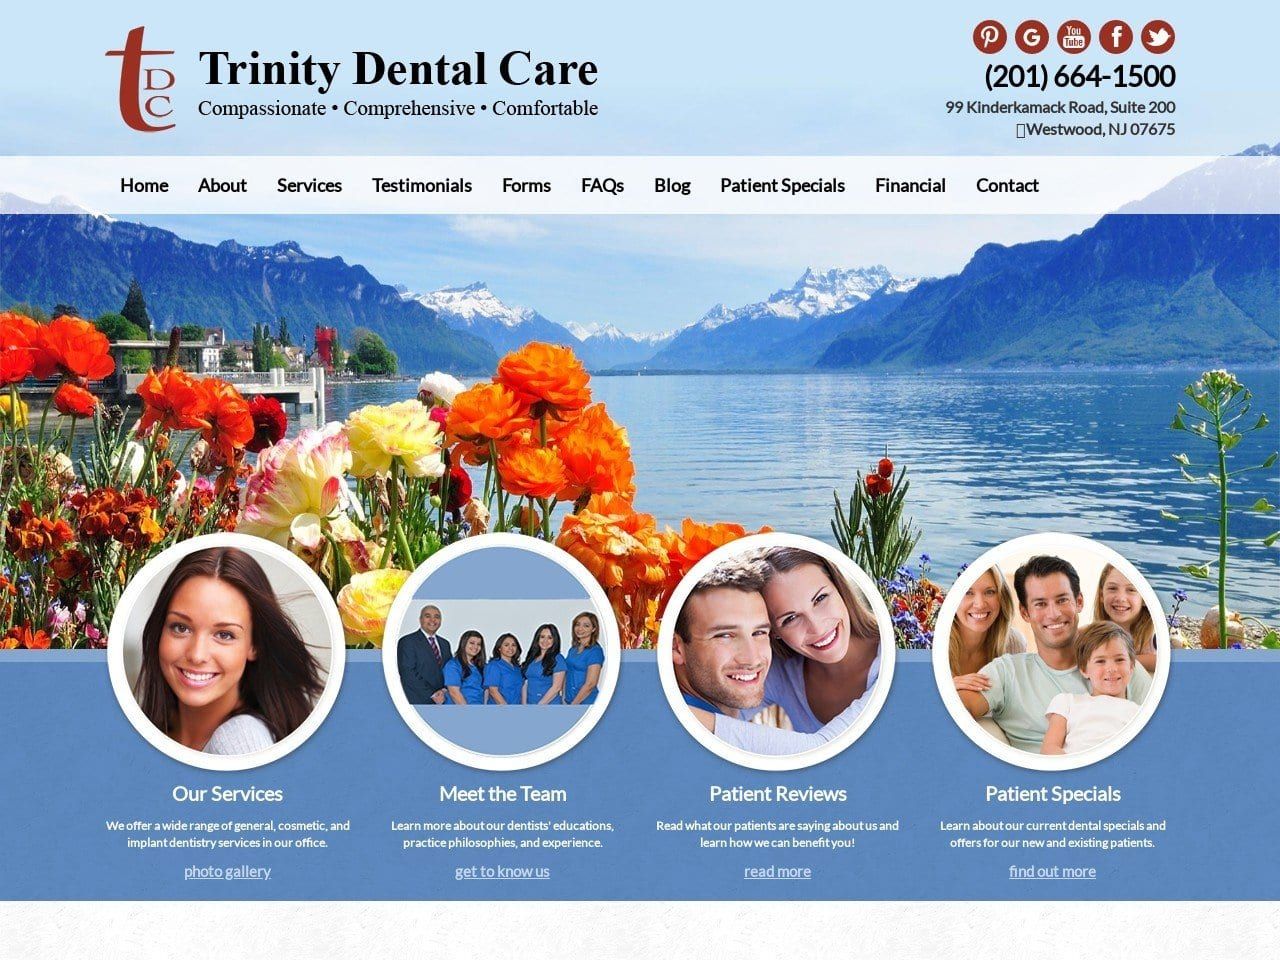 Trinity Dental Care Website Screenshot from trinitydentists.com